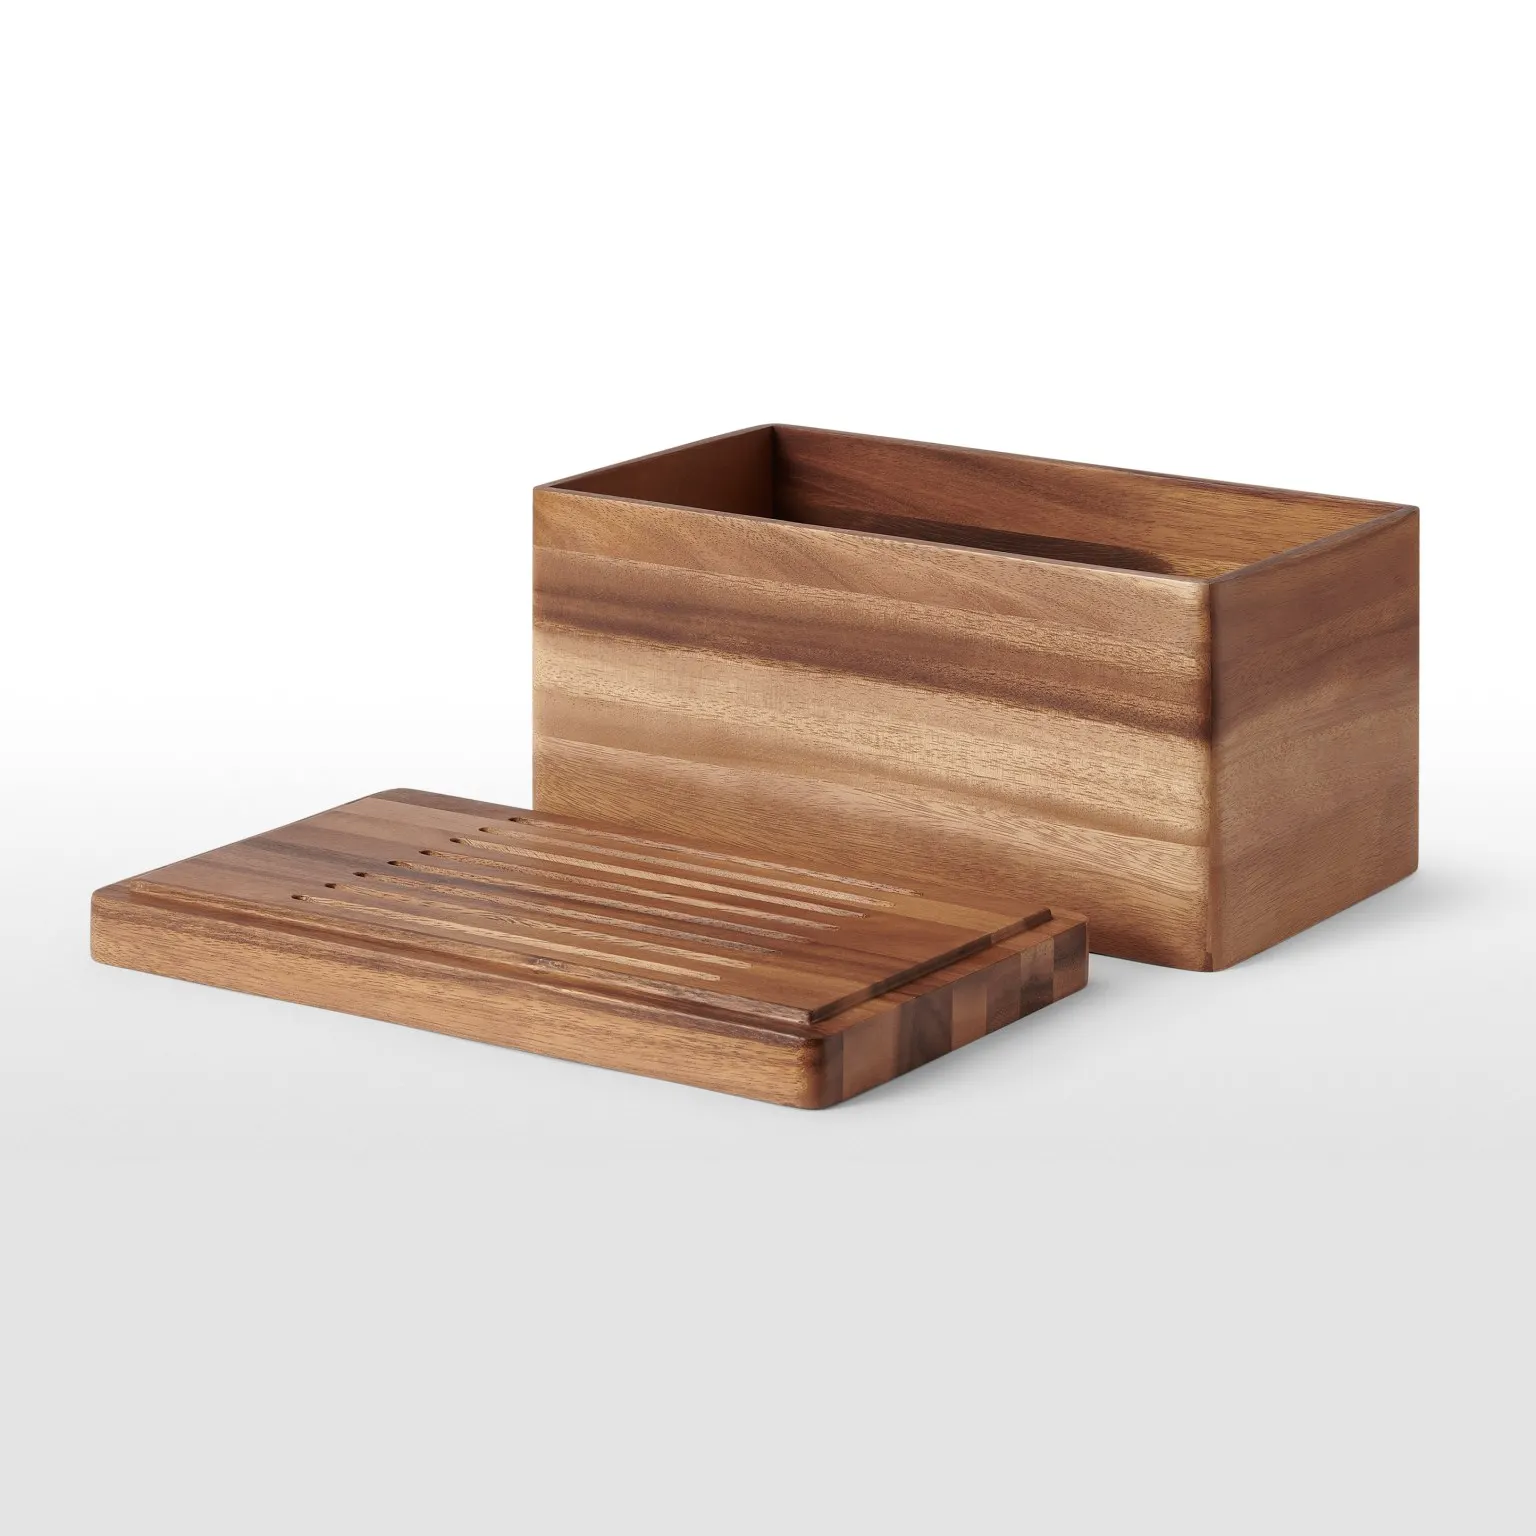 Acacia Holz Brot Box mit Tablett & Schneiden Deckel Acacia Brot Bin